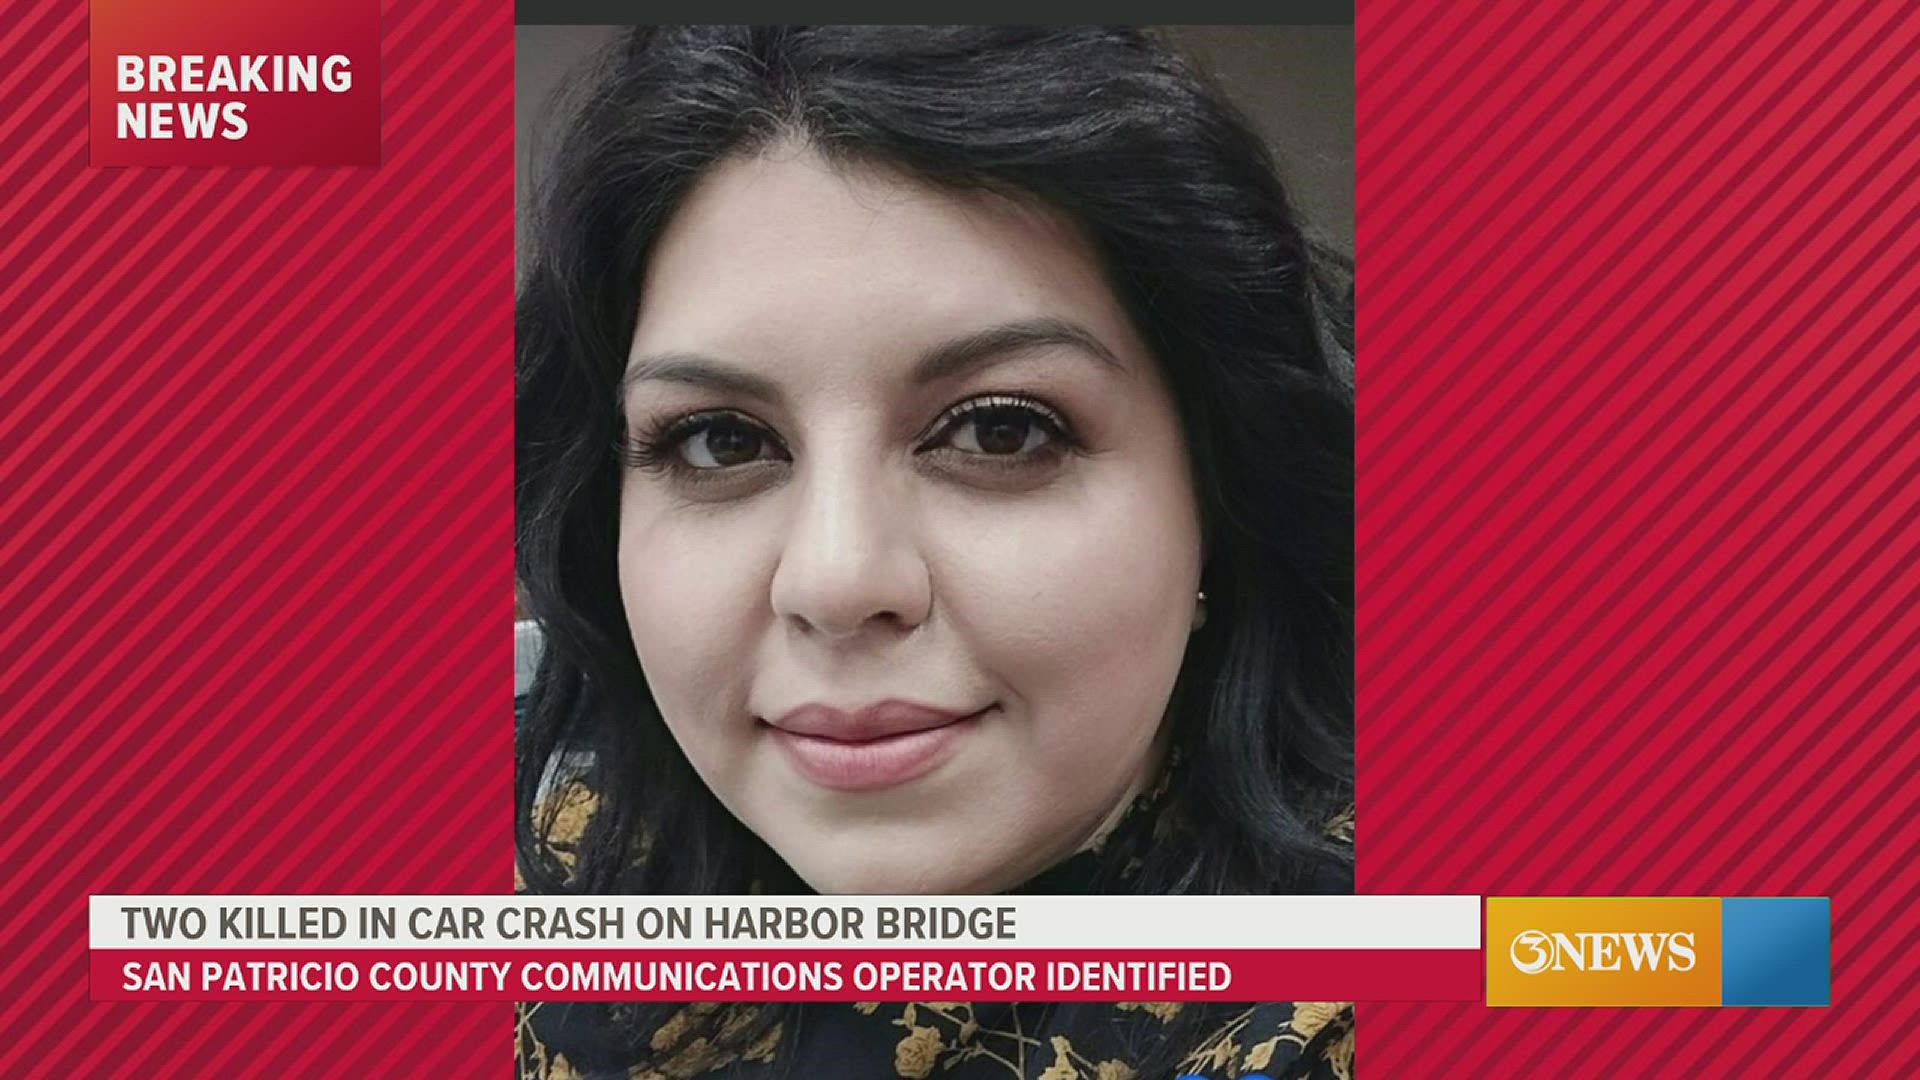 Sheriff Oscar Rivera said San Patricio County Communications Operator Betsy Mandujano, 37, was hit head-on by a wrong-way driver.